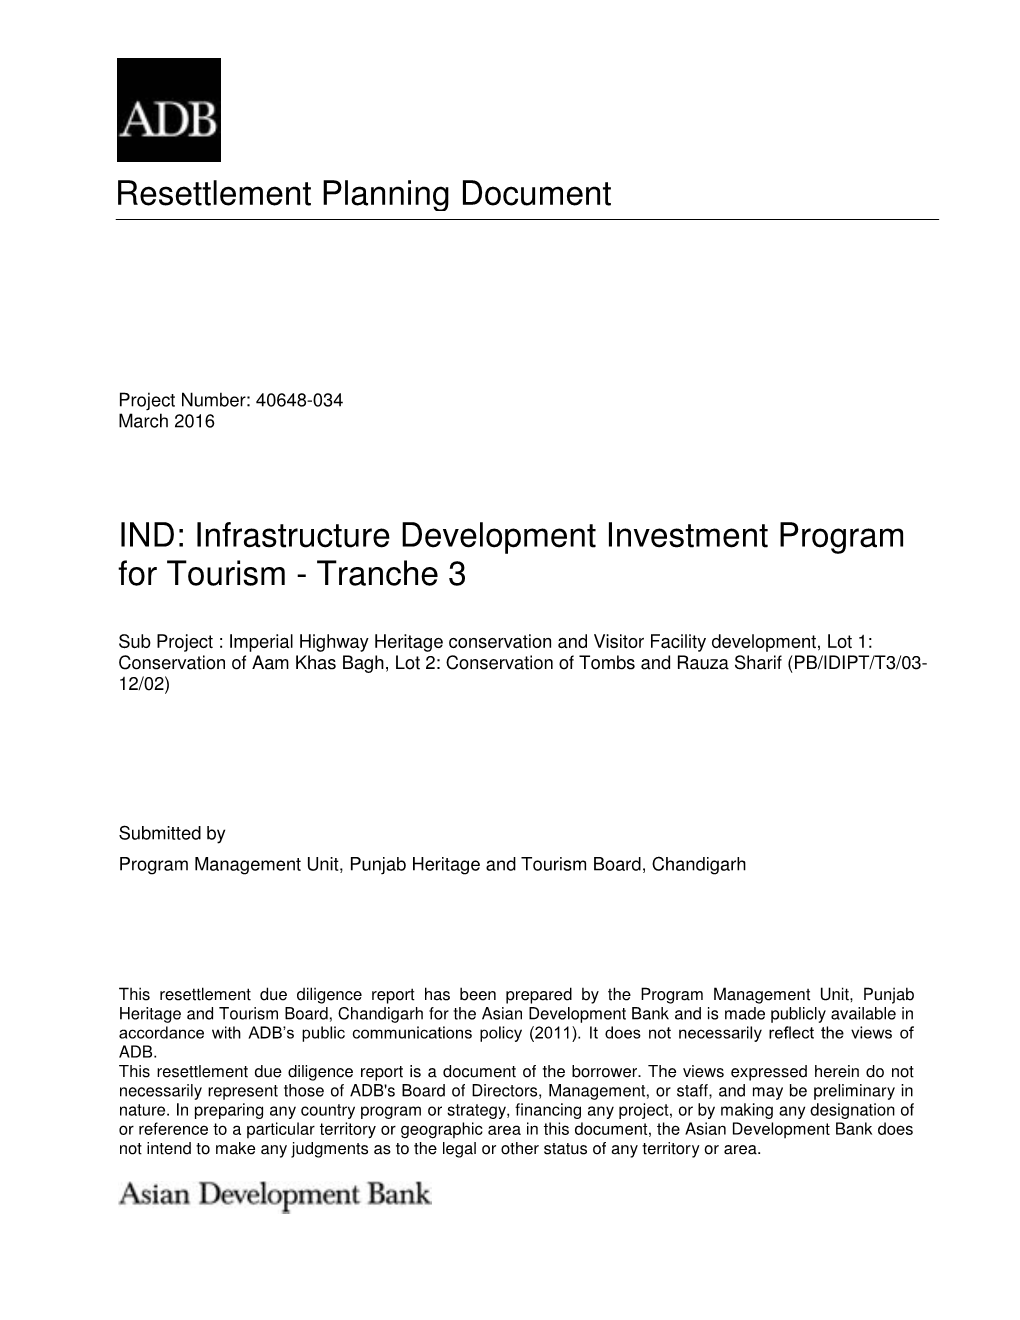 40648-034: Infrastructure Development Investment Program